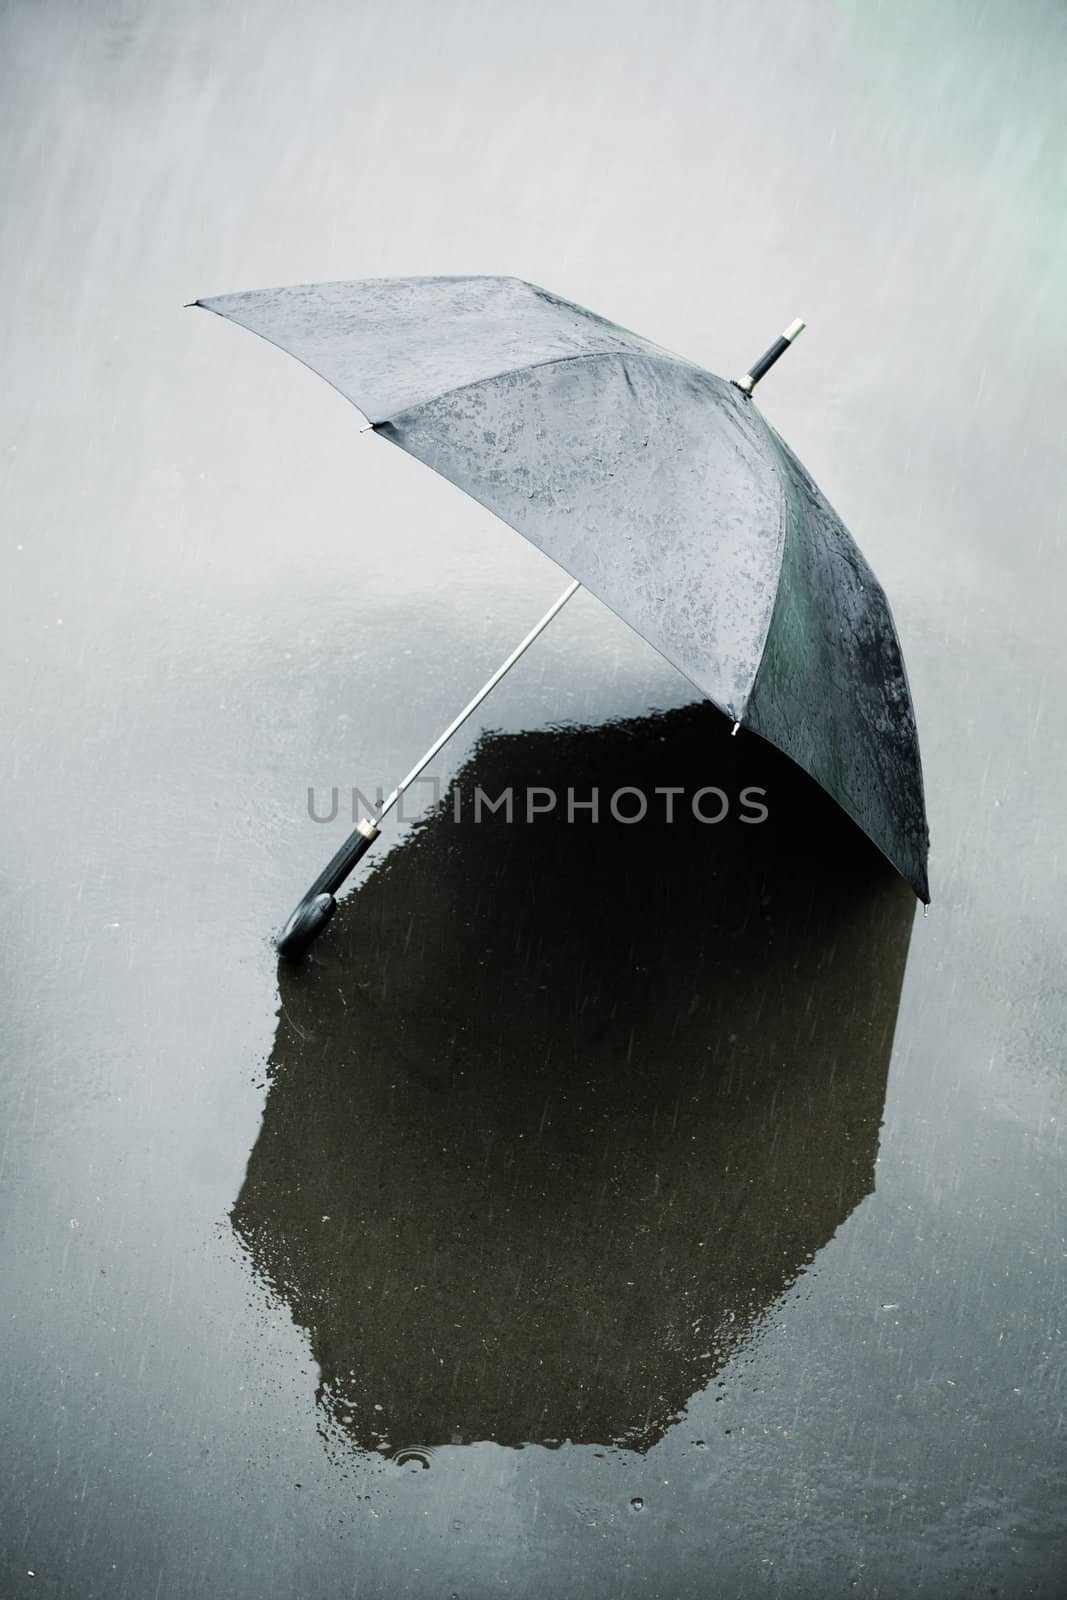 rain and wet umbrella by Kuzma